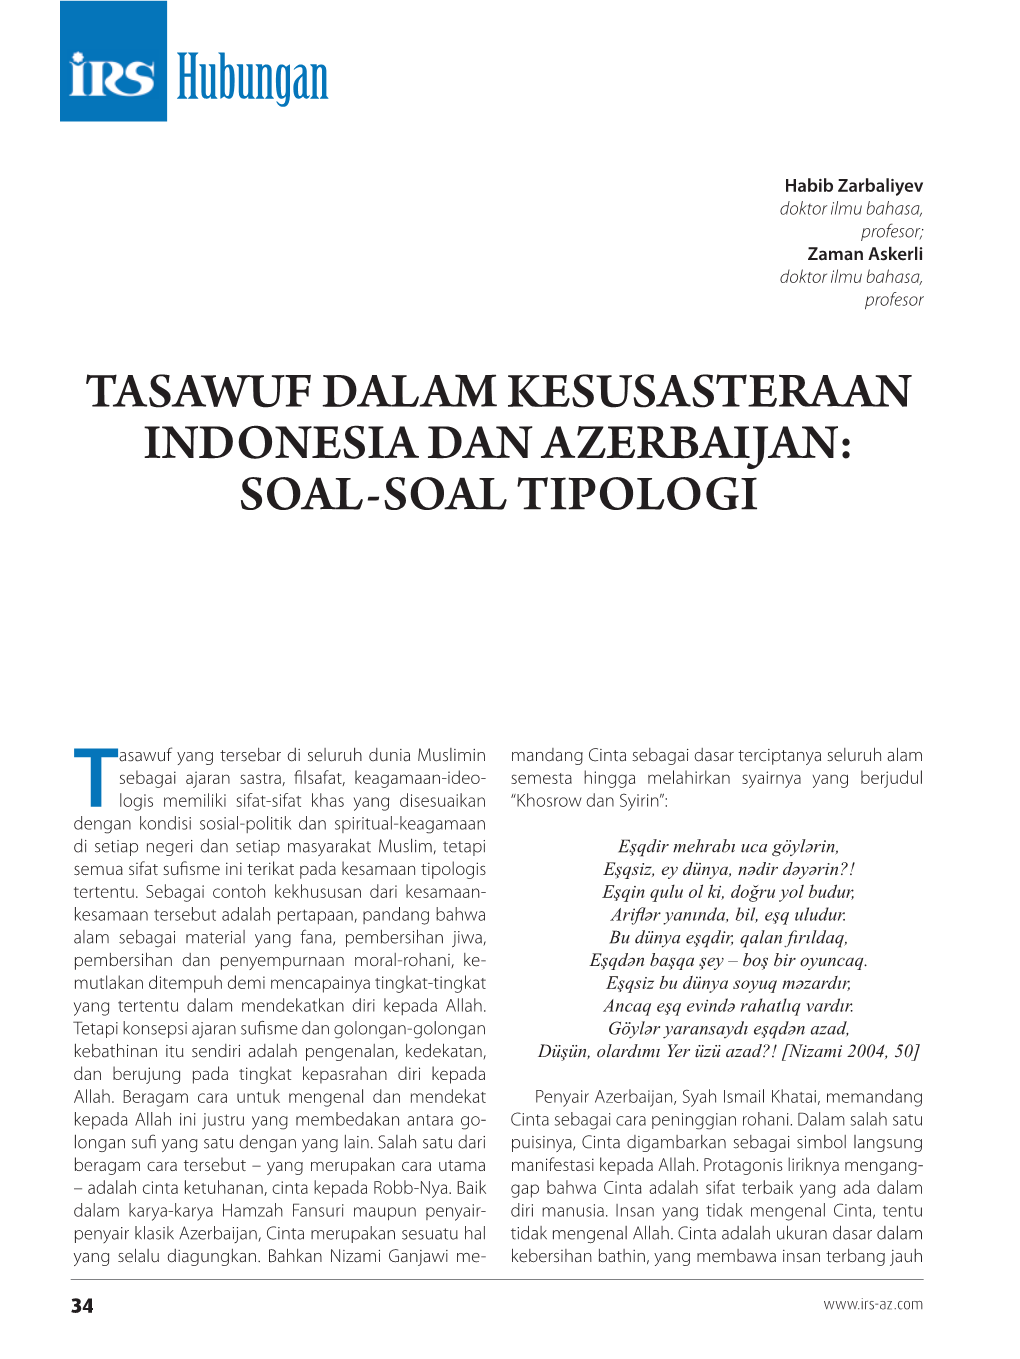 Tasawuf Dalam KesusasteAn Indonesia Dan Azerbaijan: Soal-Soal Tipologi